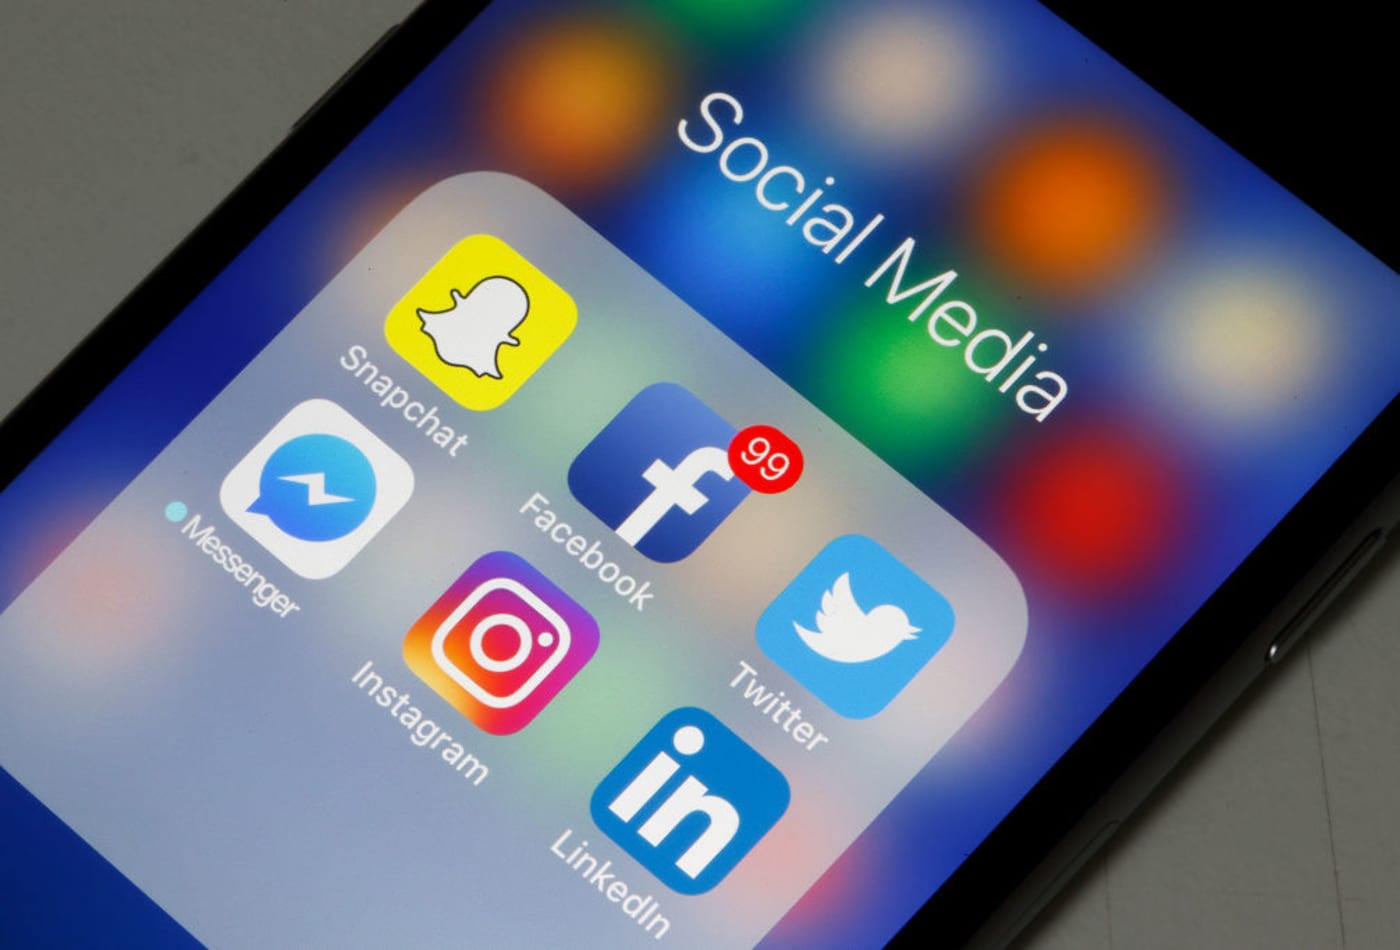 Facebook, Instagram, Snapchat: What teenagers think of social media
